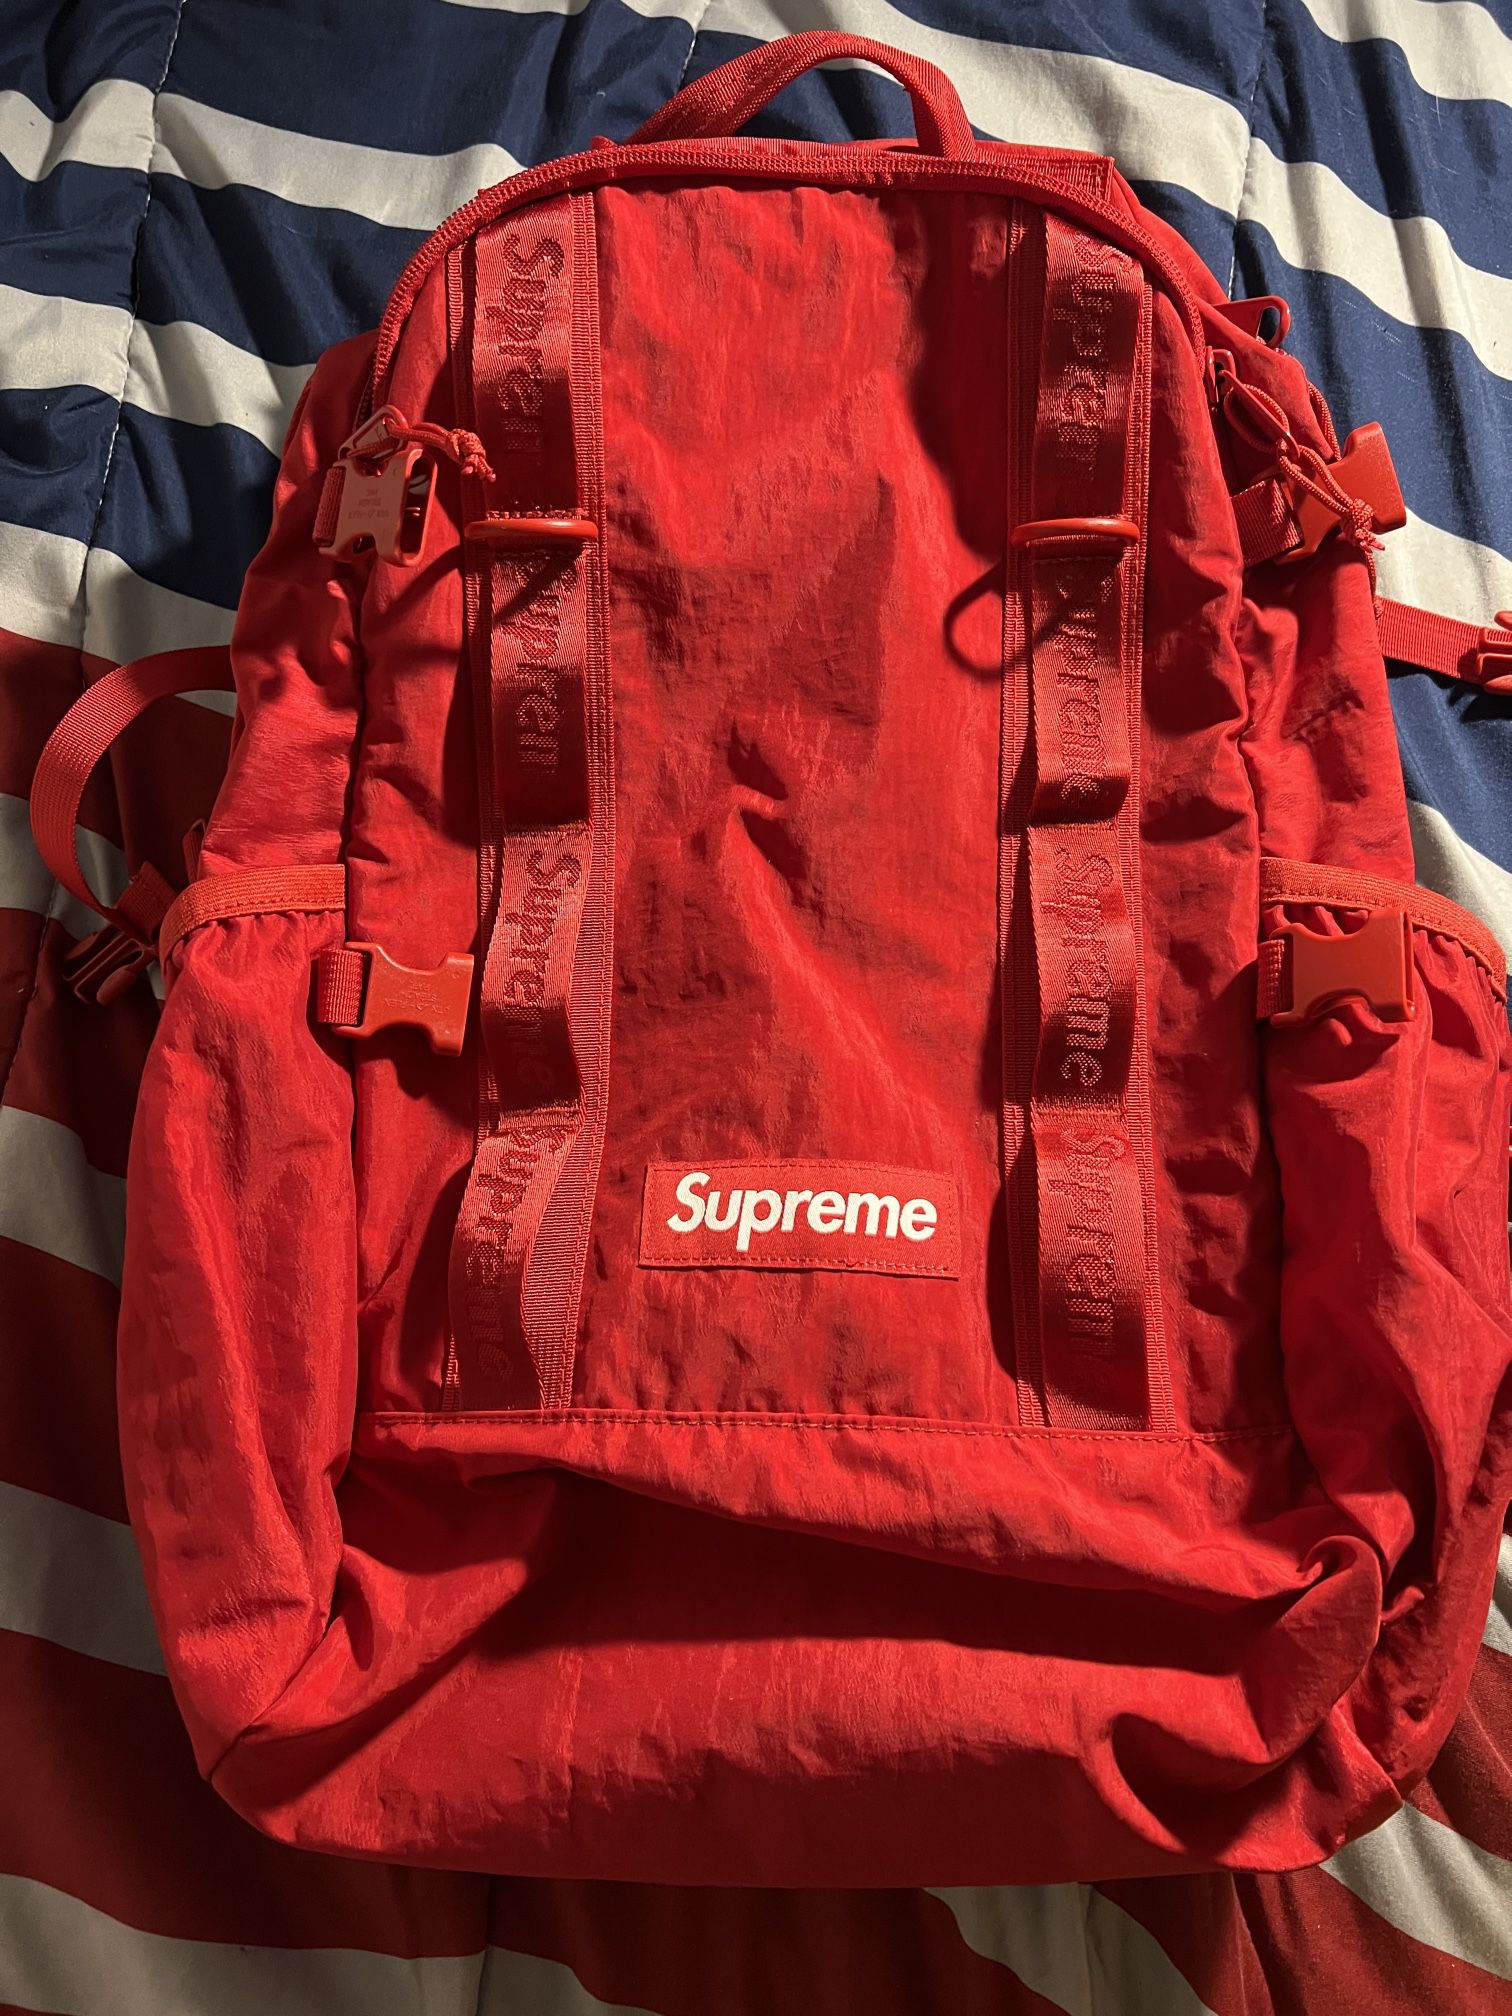 supreme red backpack